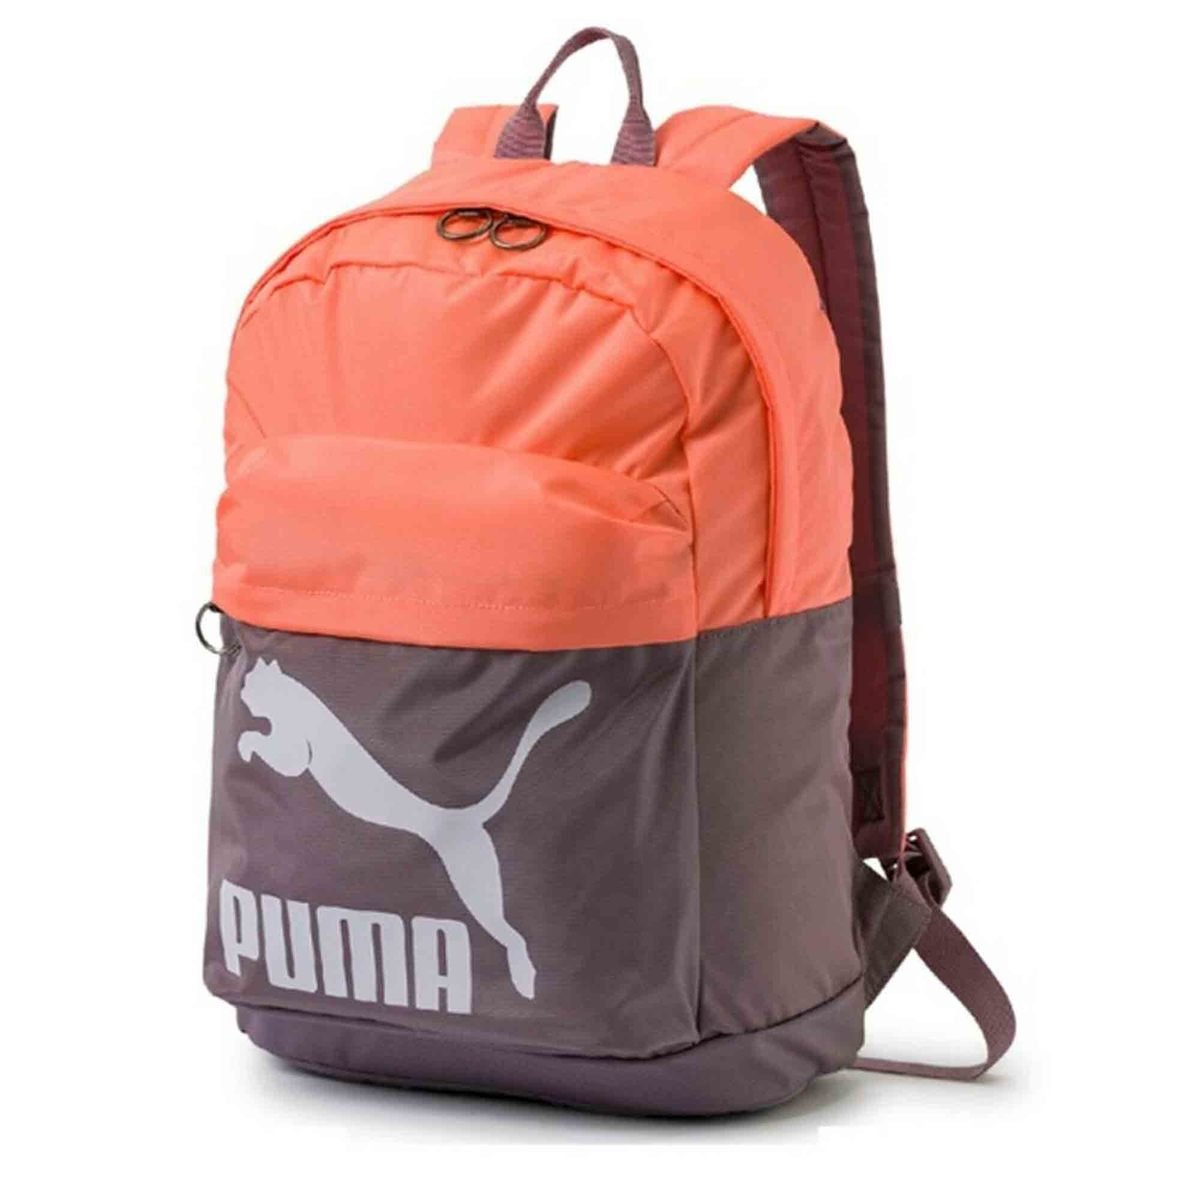 PUMA Originals Backpack Orange Grey 07479917